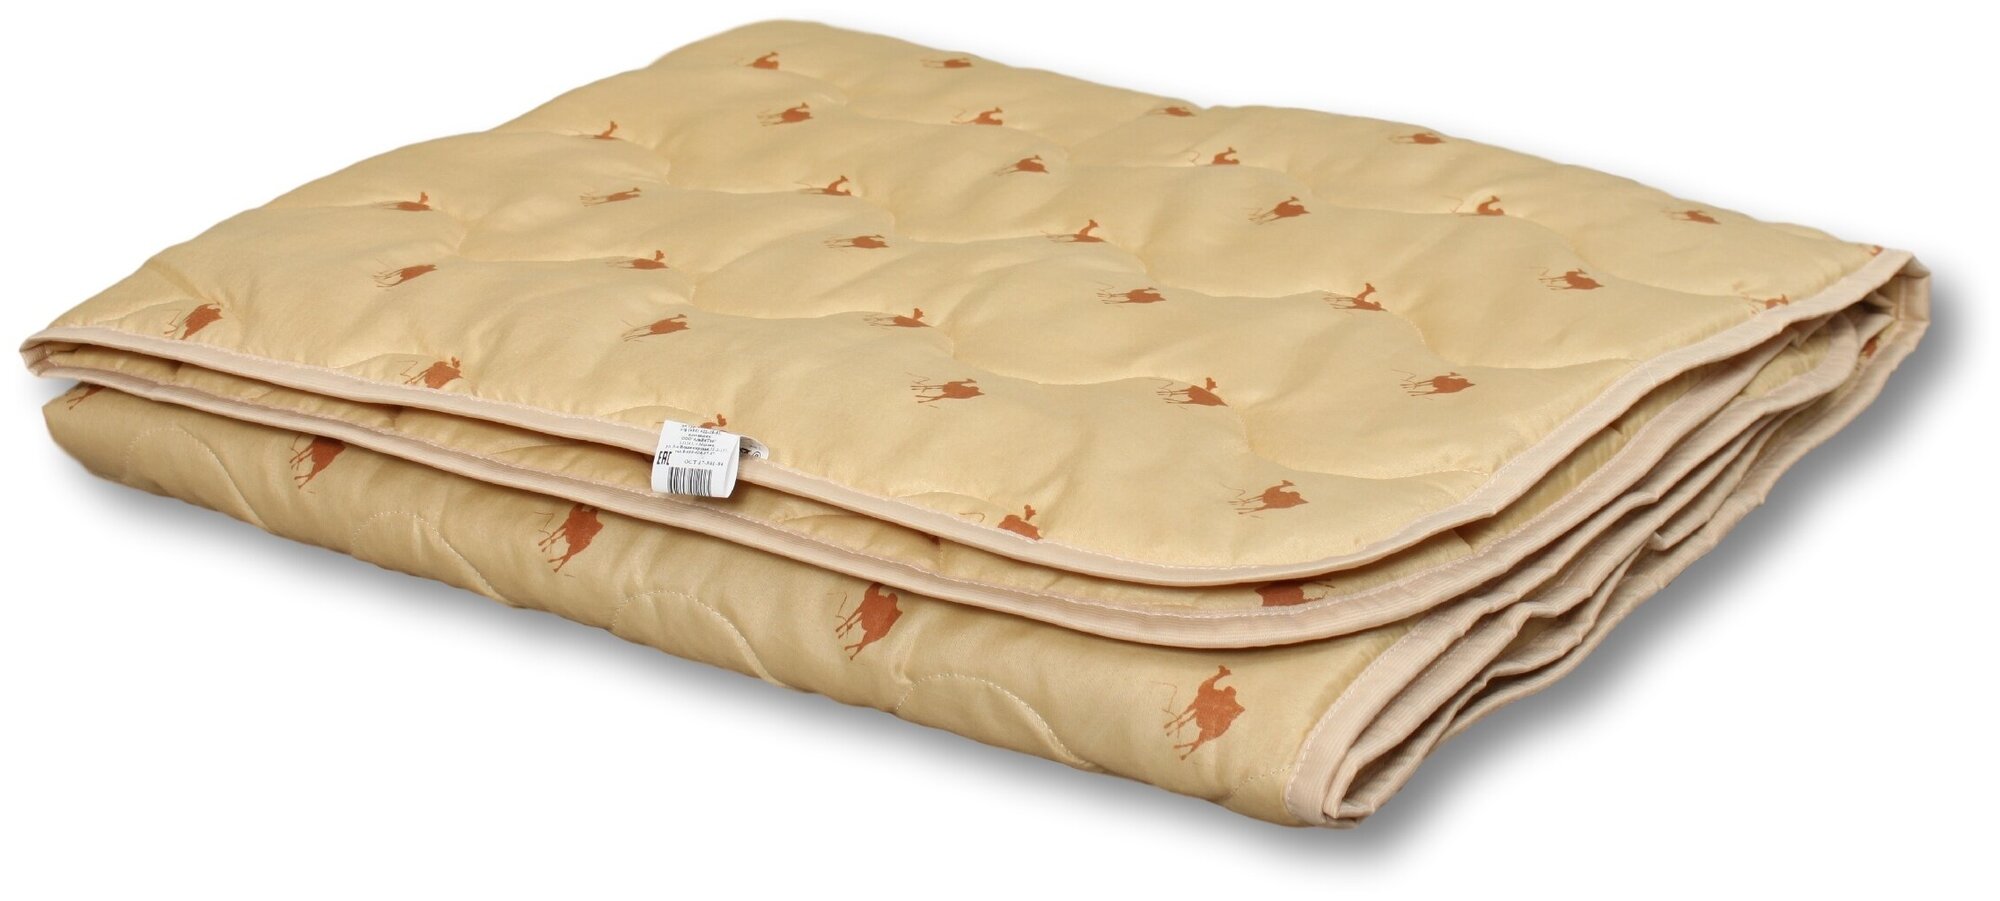 Одеяло AlViTek Camel, легкое, 140 х 205 см, светло-коричневый